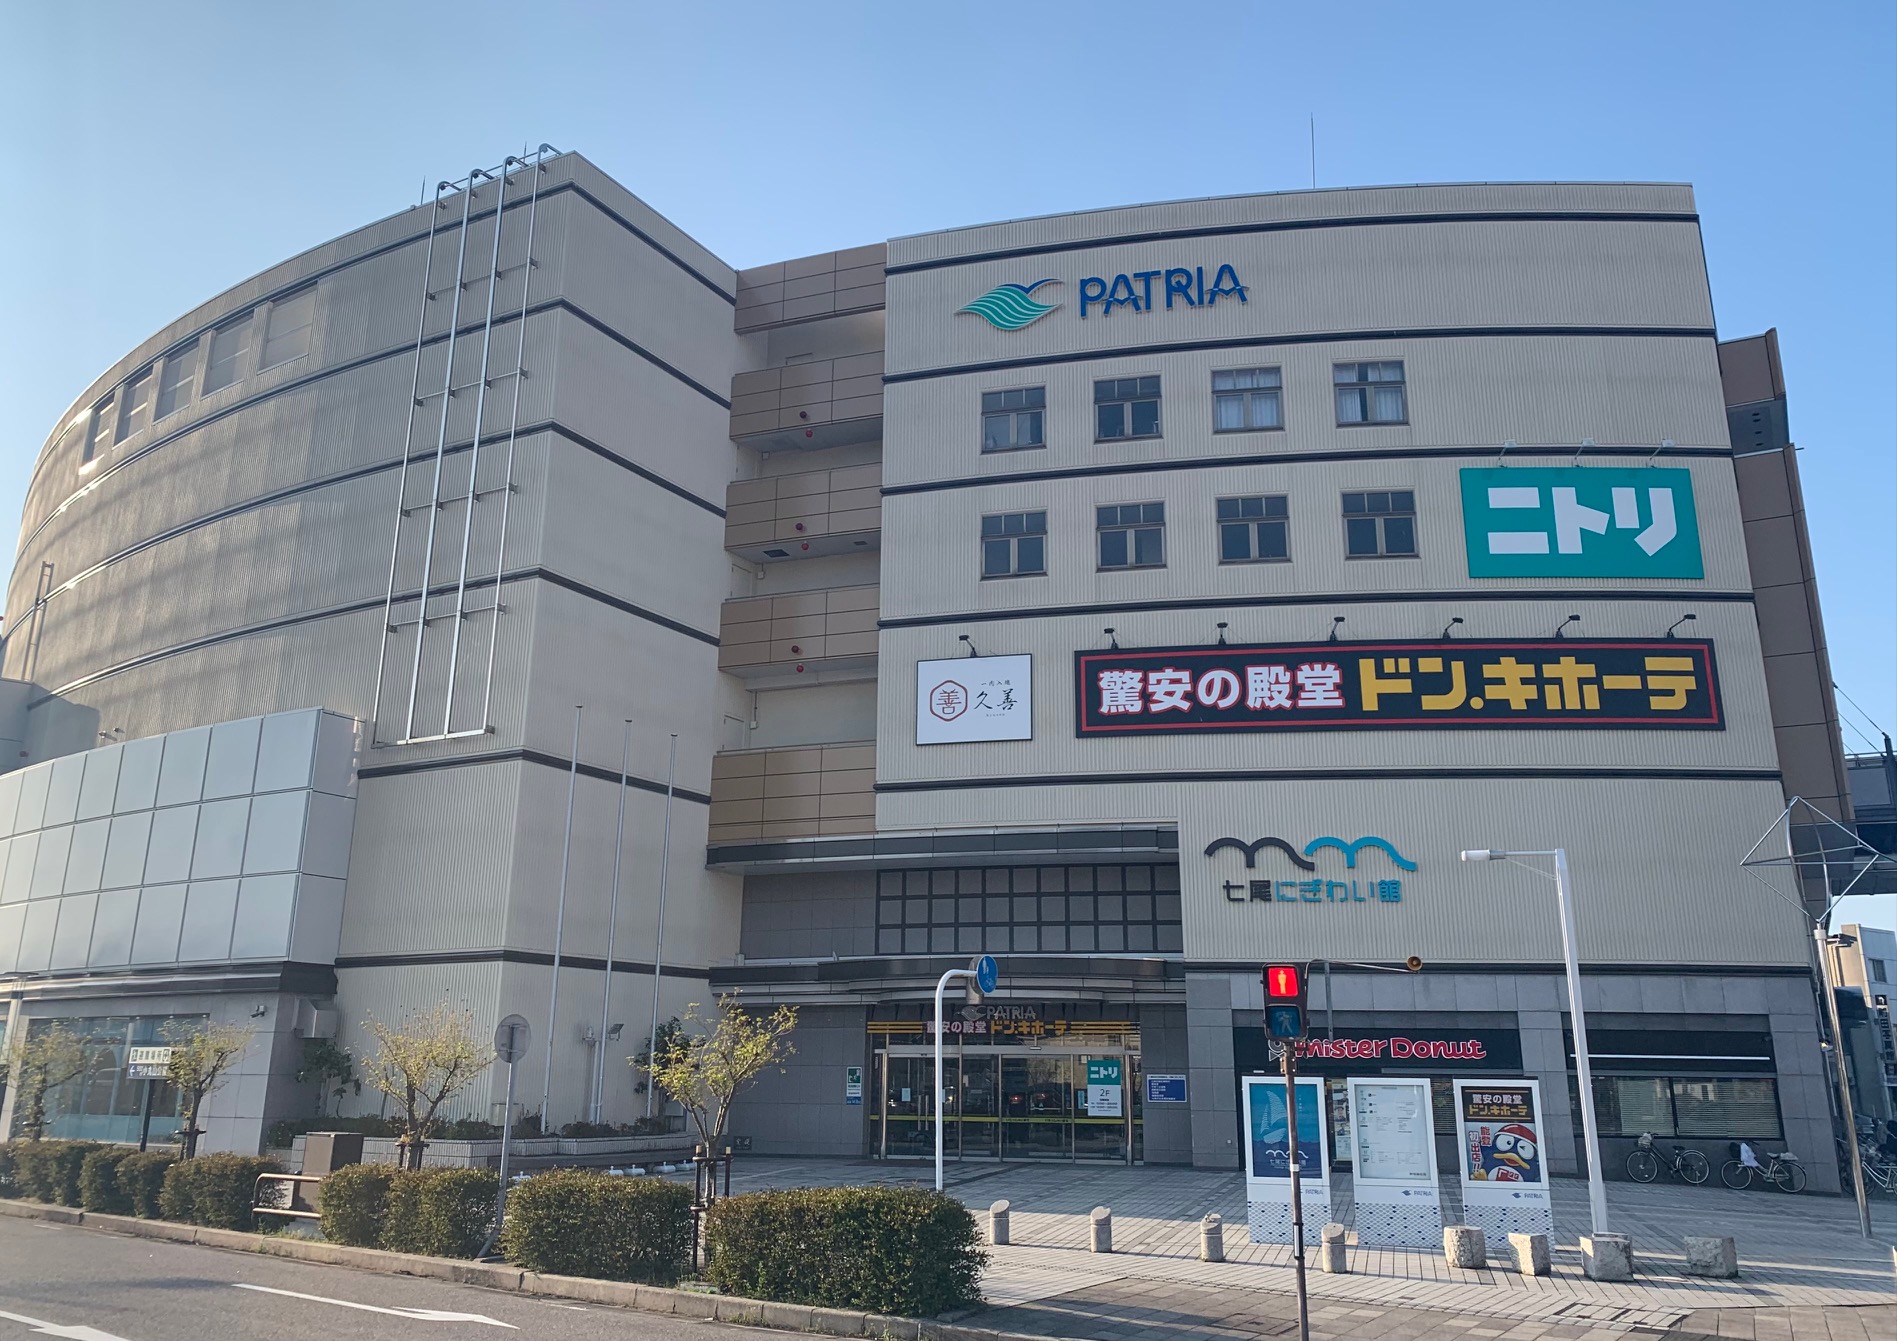 JR七尾駅前の複合施設「パトリア」にドン・キホーテ七尾店がオープン ／ 地域停滞に歯止めかかる？